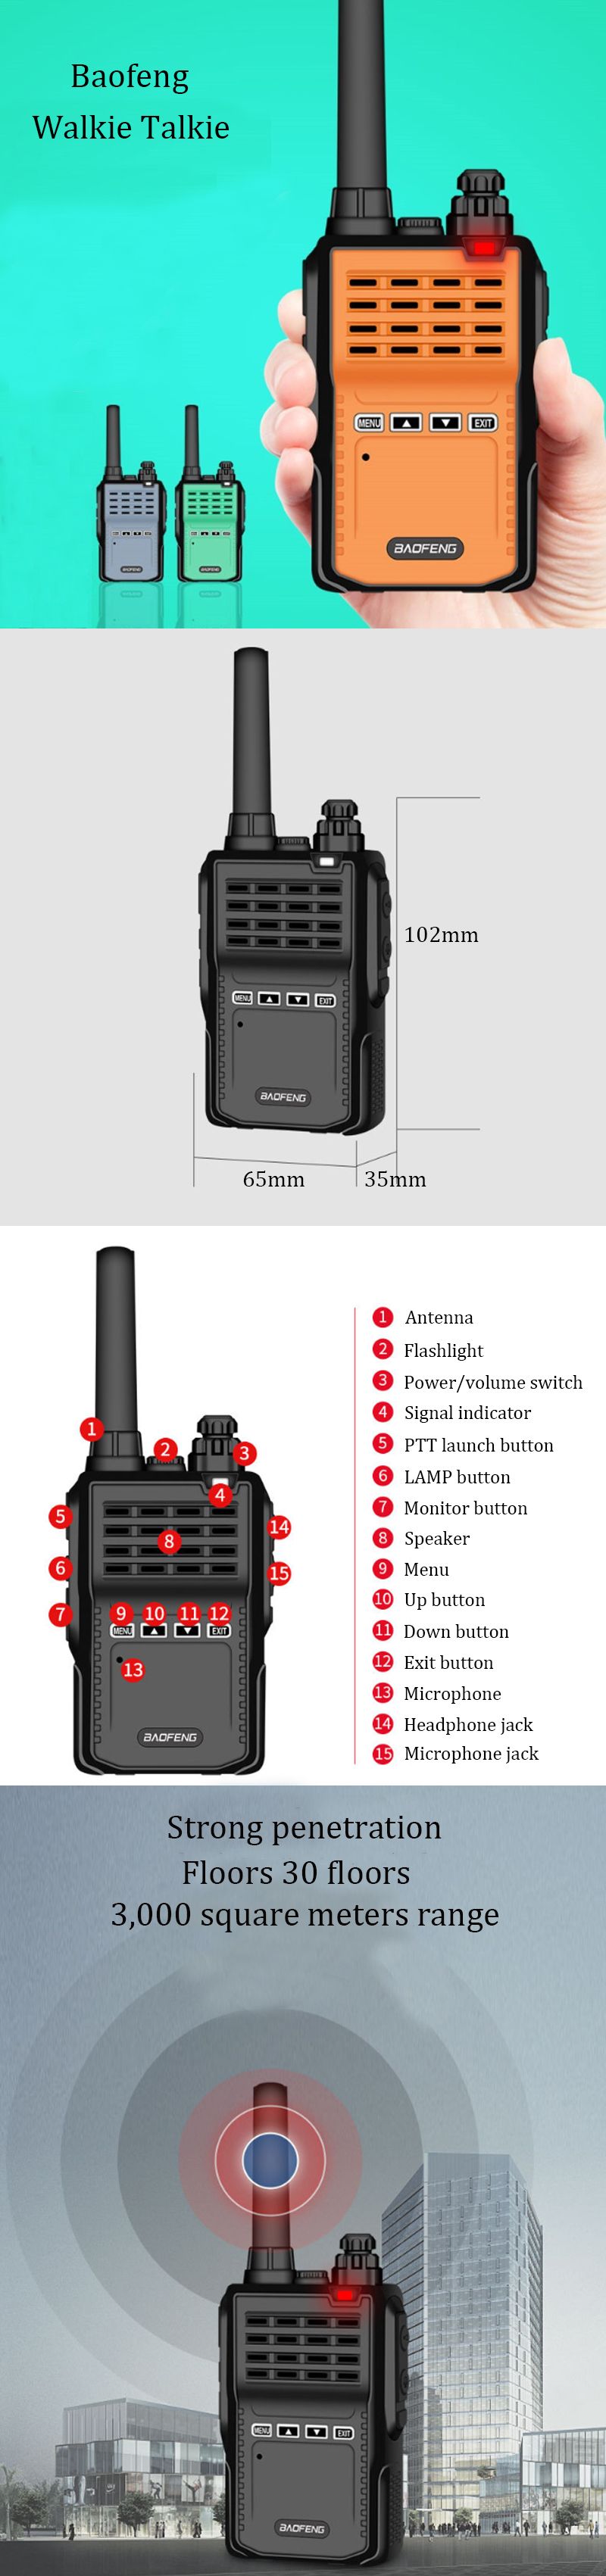 BAOFENG-BF-E90-Walkie-Talkie-Frequency-400-470MHz-Portable-Communicator-Radio-Station-Intercom-1389369